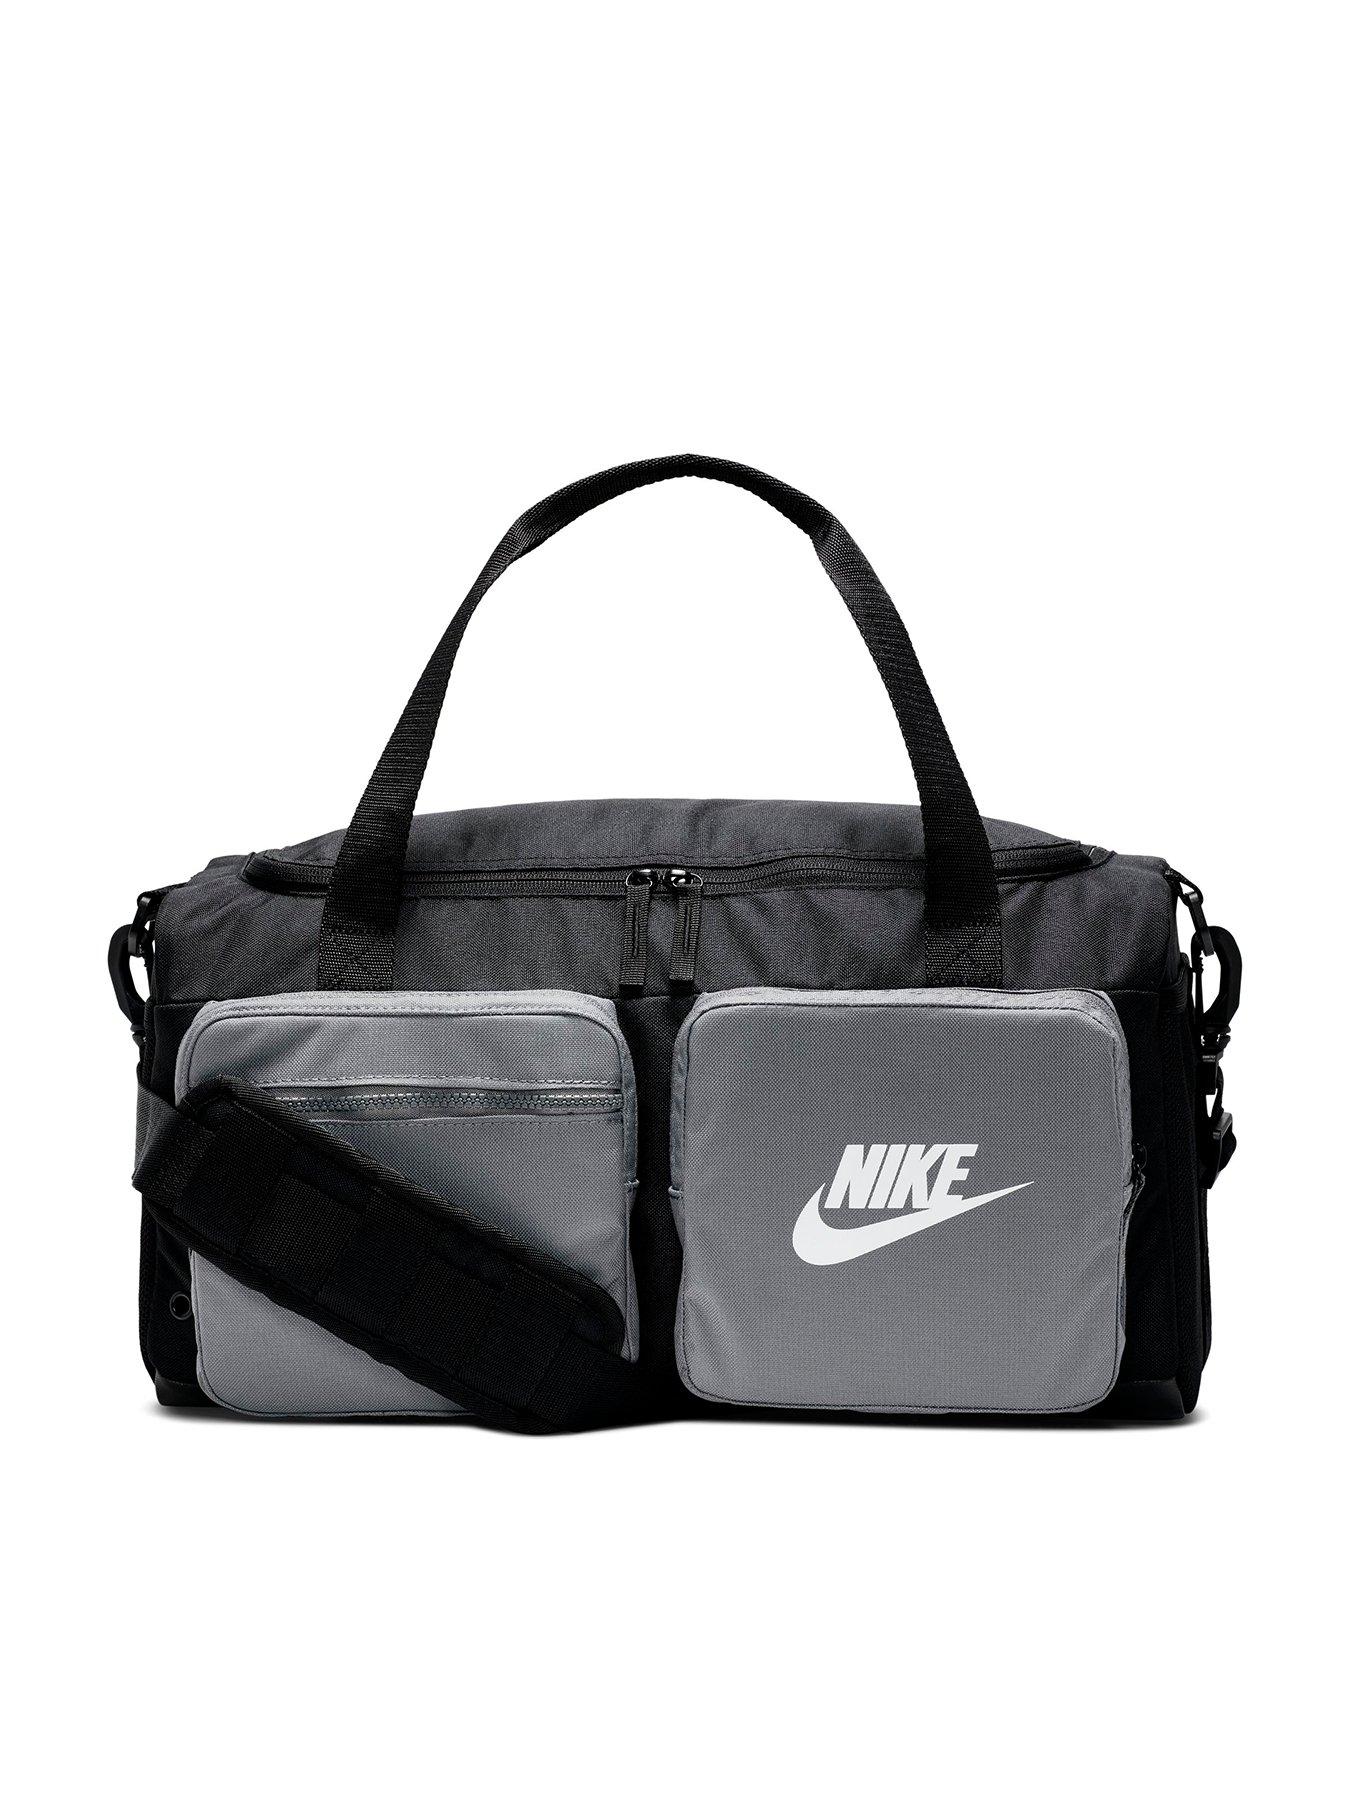 Nike Future Pro Duffle Bag - Black/Grey | very.co.uk